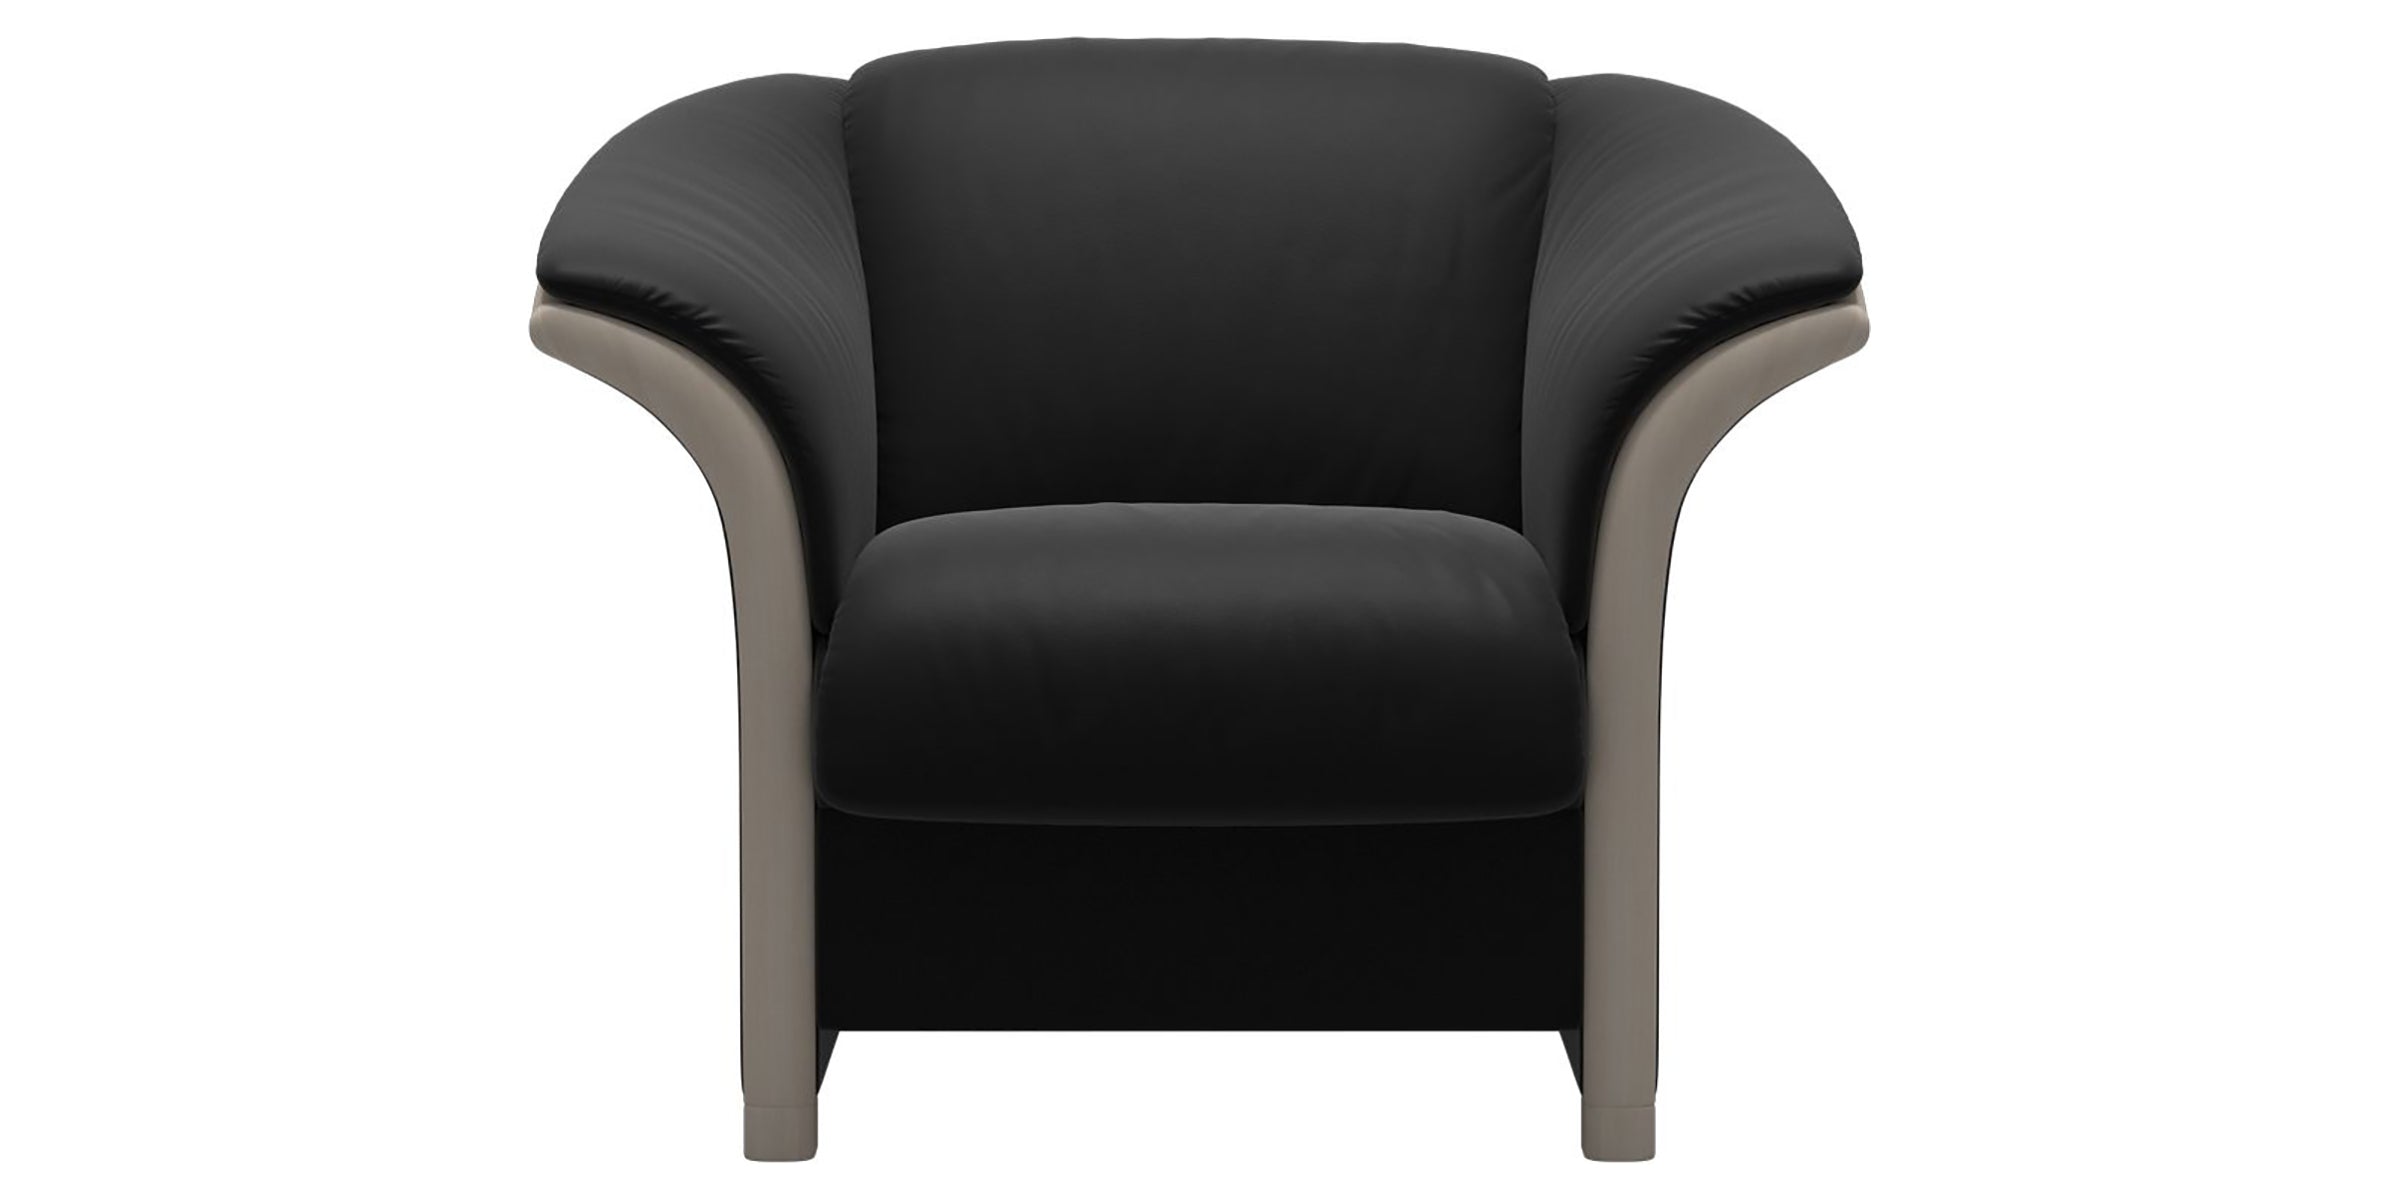 Paloma Leather Black and Whitewash Arm Trim | Stressless Manhattan Chair | Valley Ridge Furniture